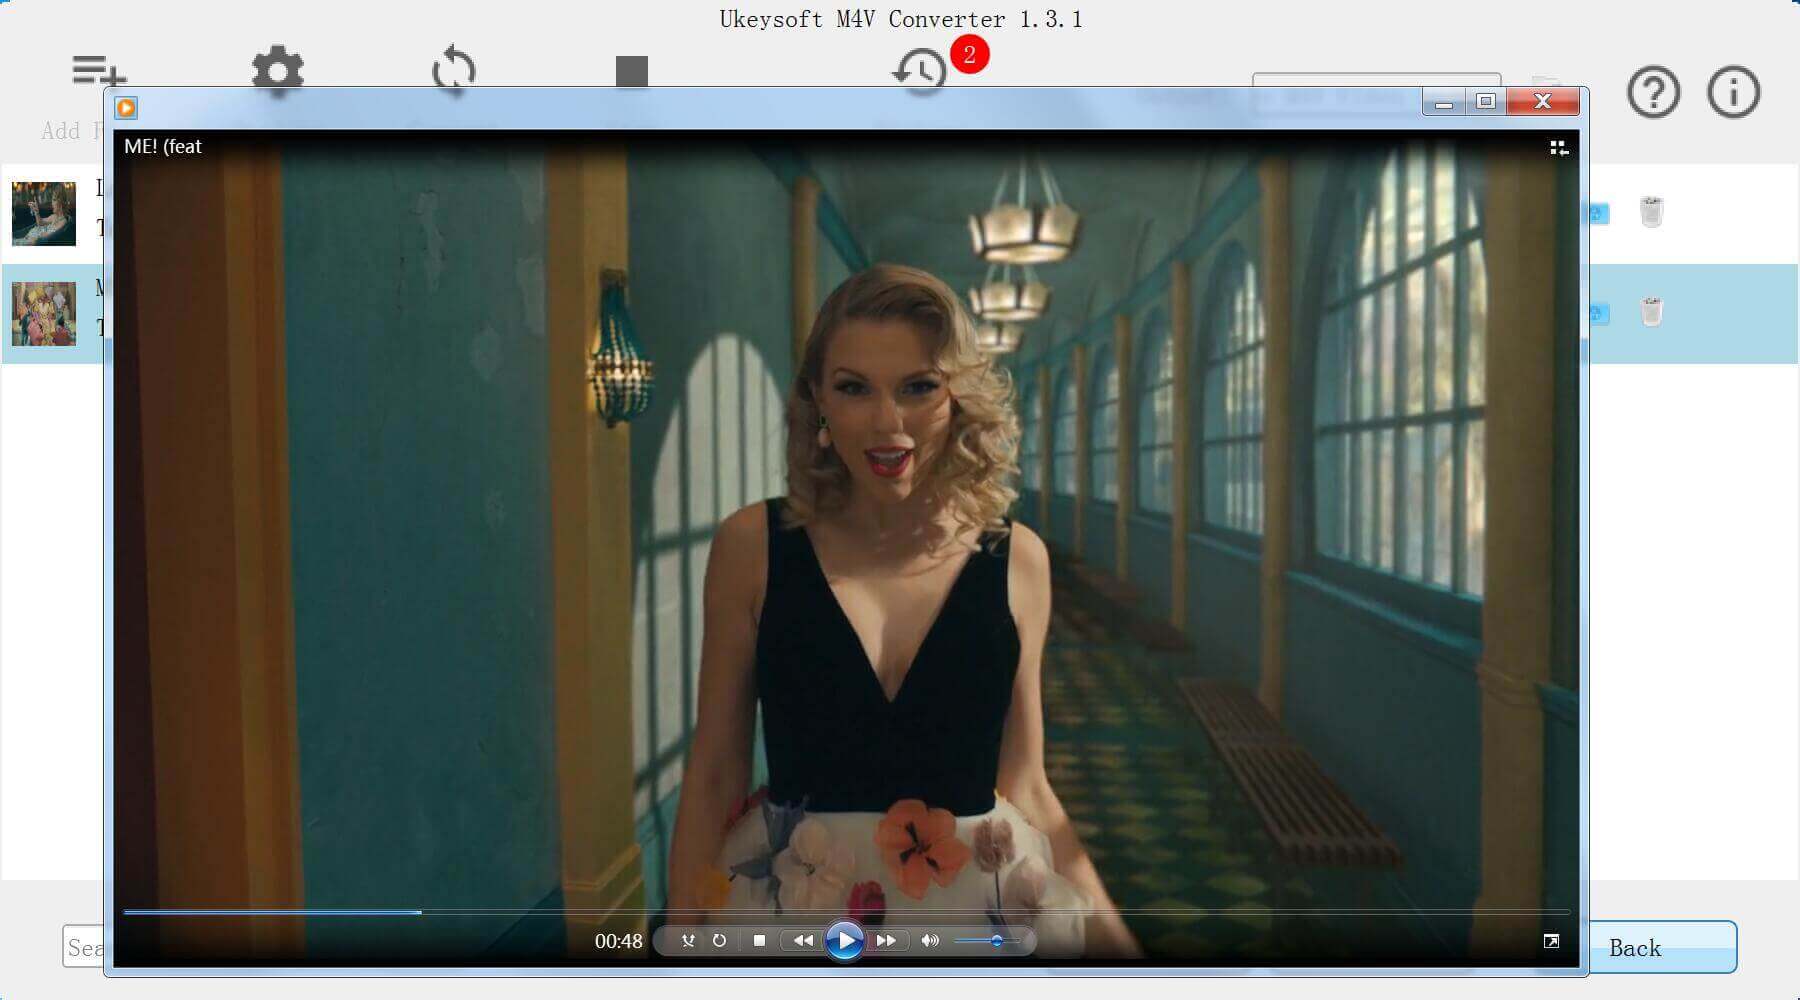 watch itunes music video via windows media player